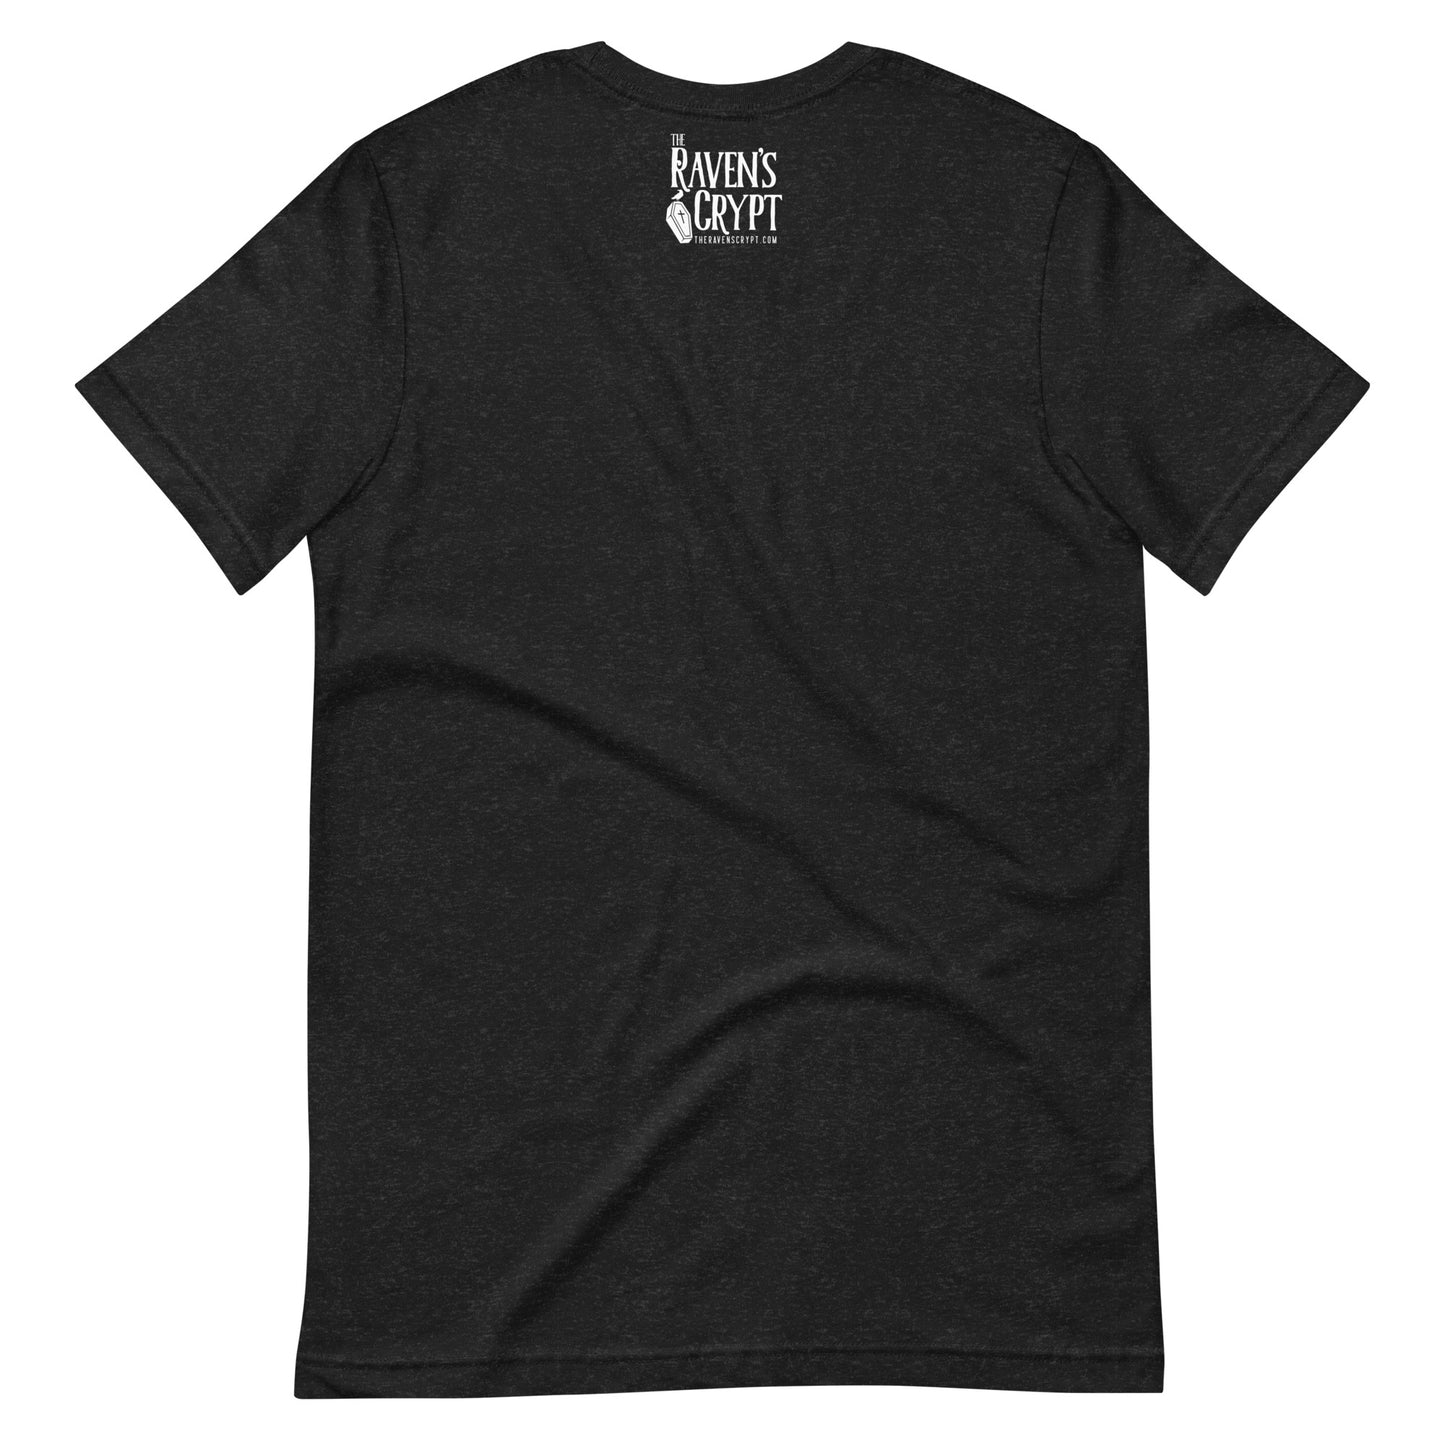 King of Fire - Men's t-shirt - Black Heather Back